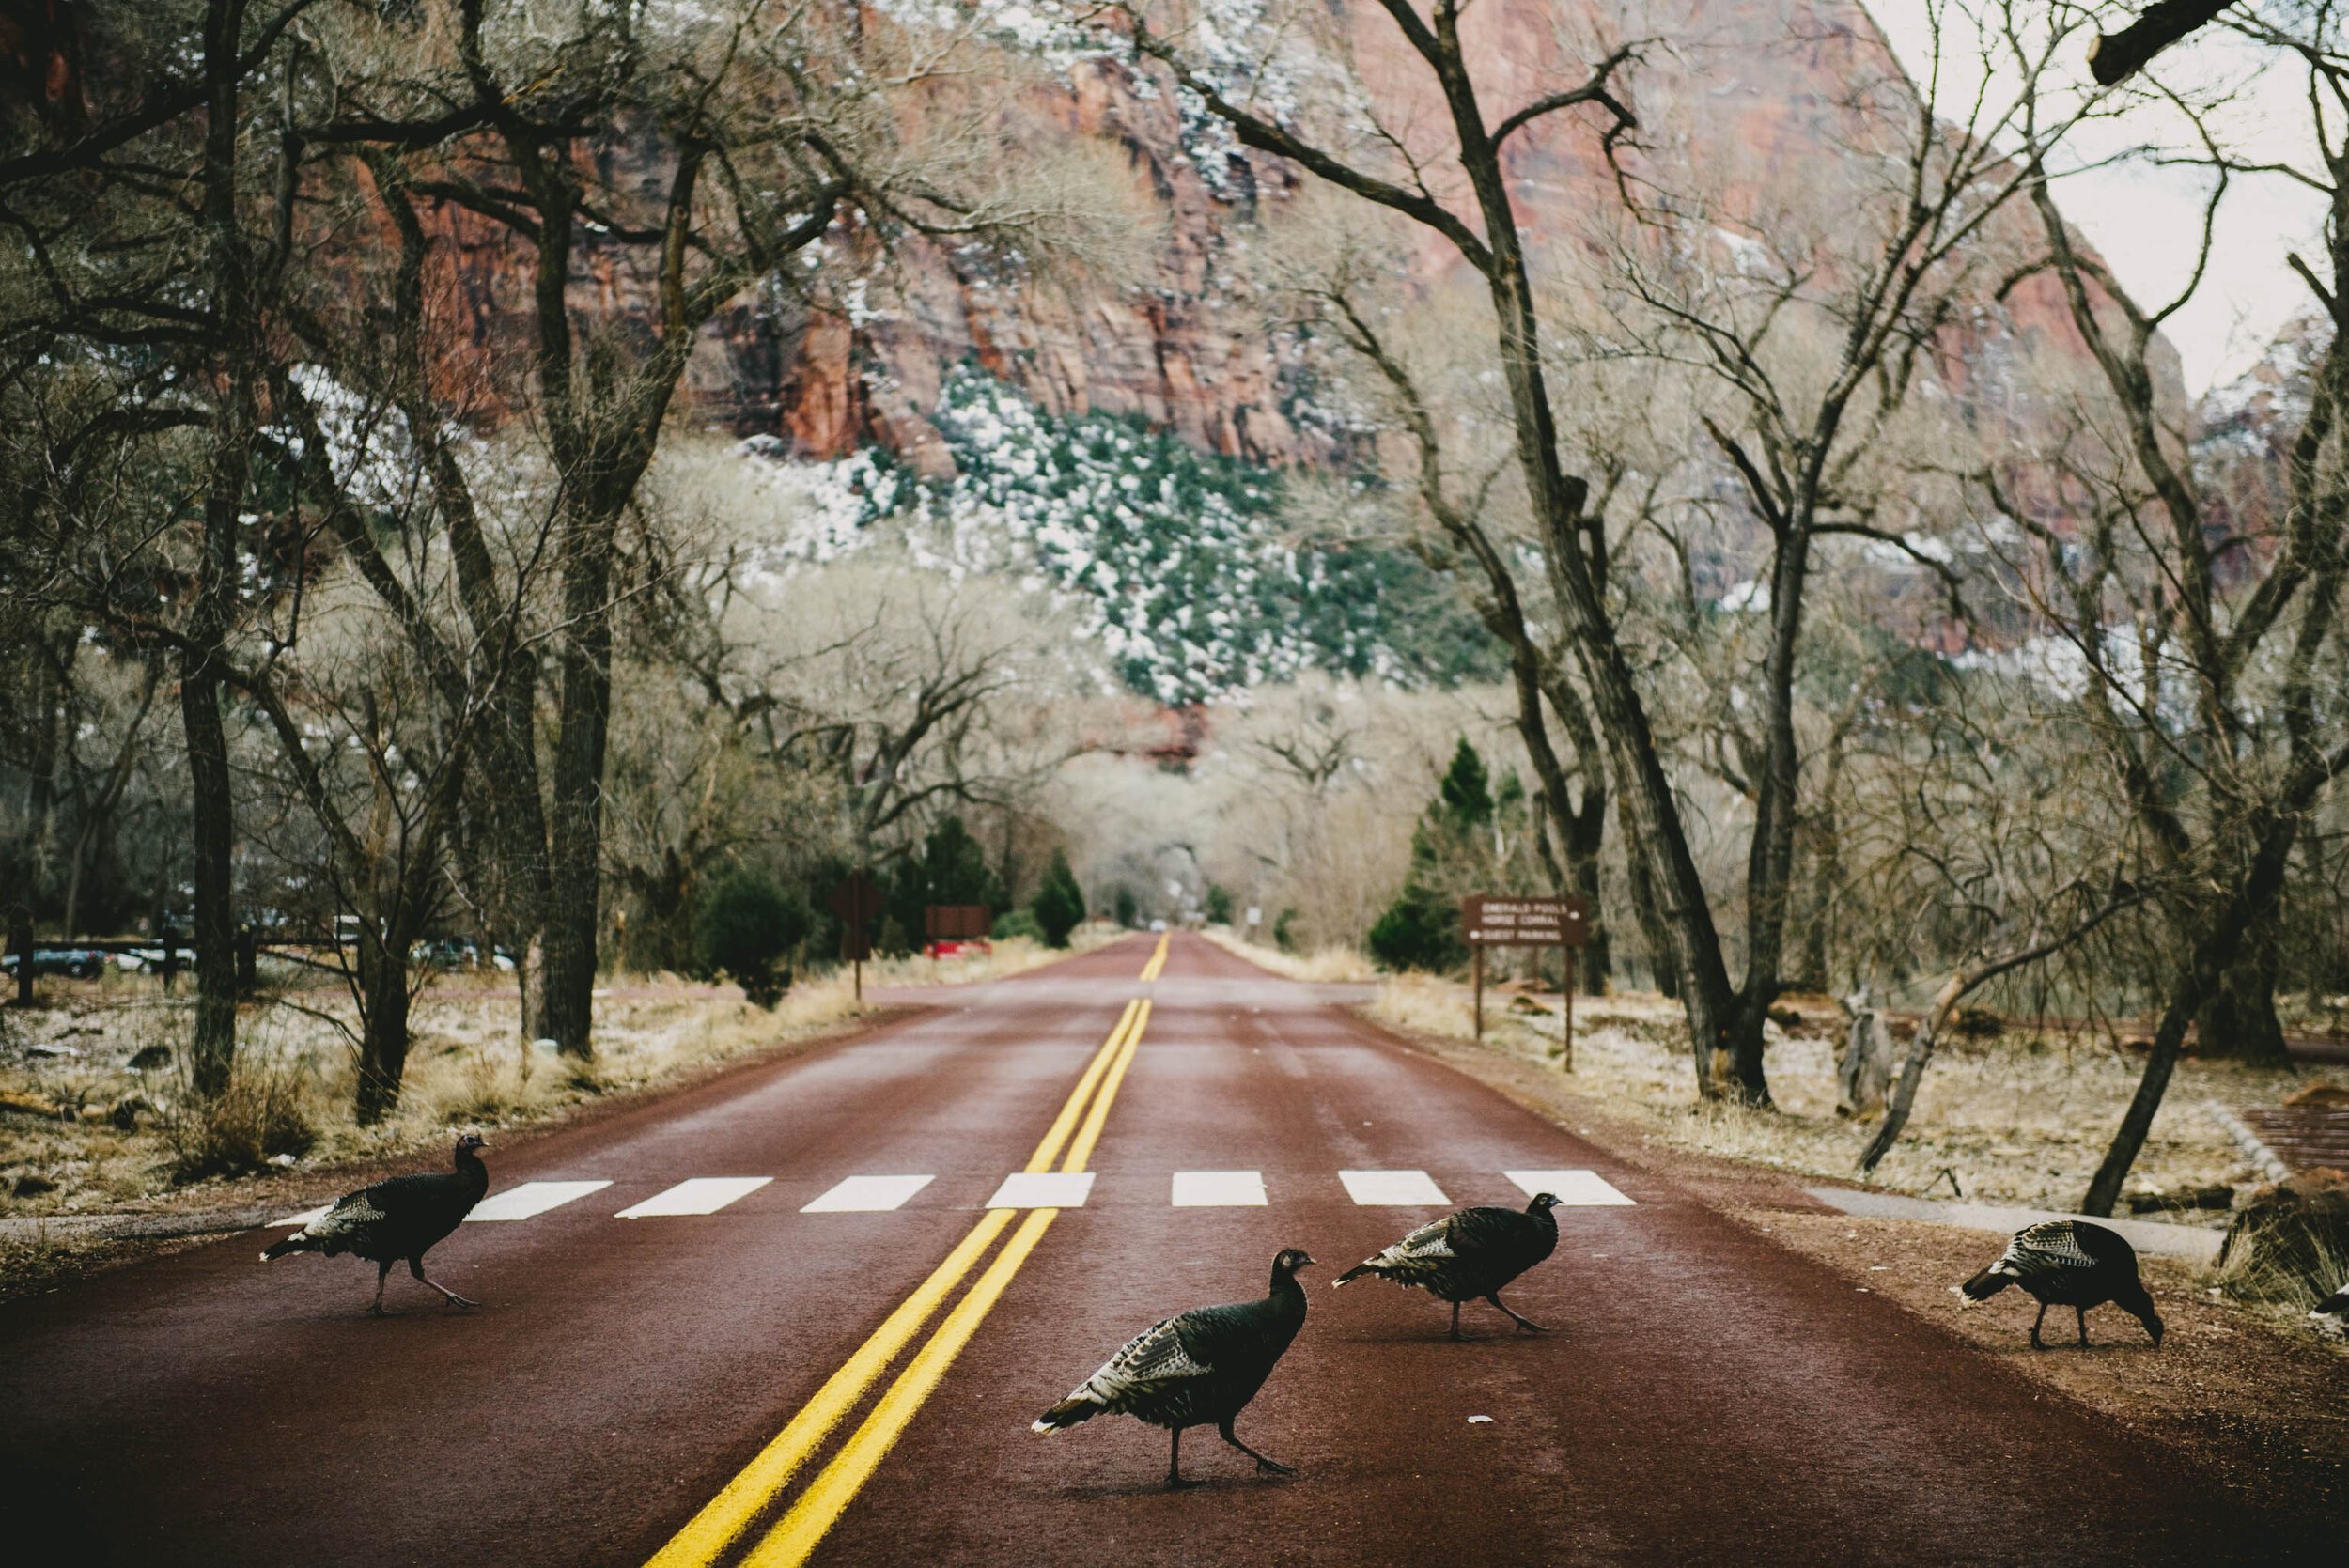 wild turkeys crossing the road in zion national park